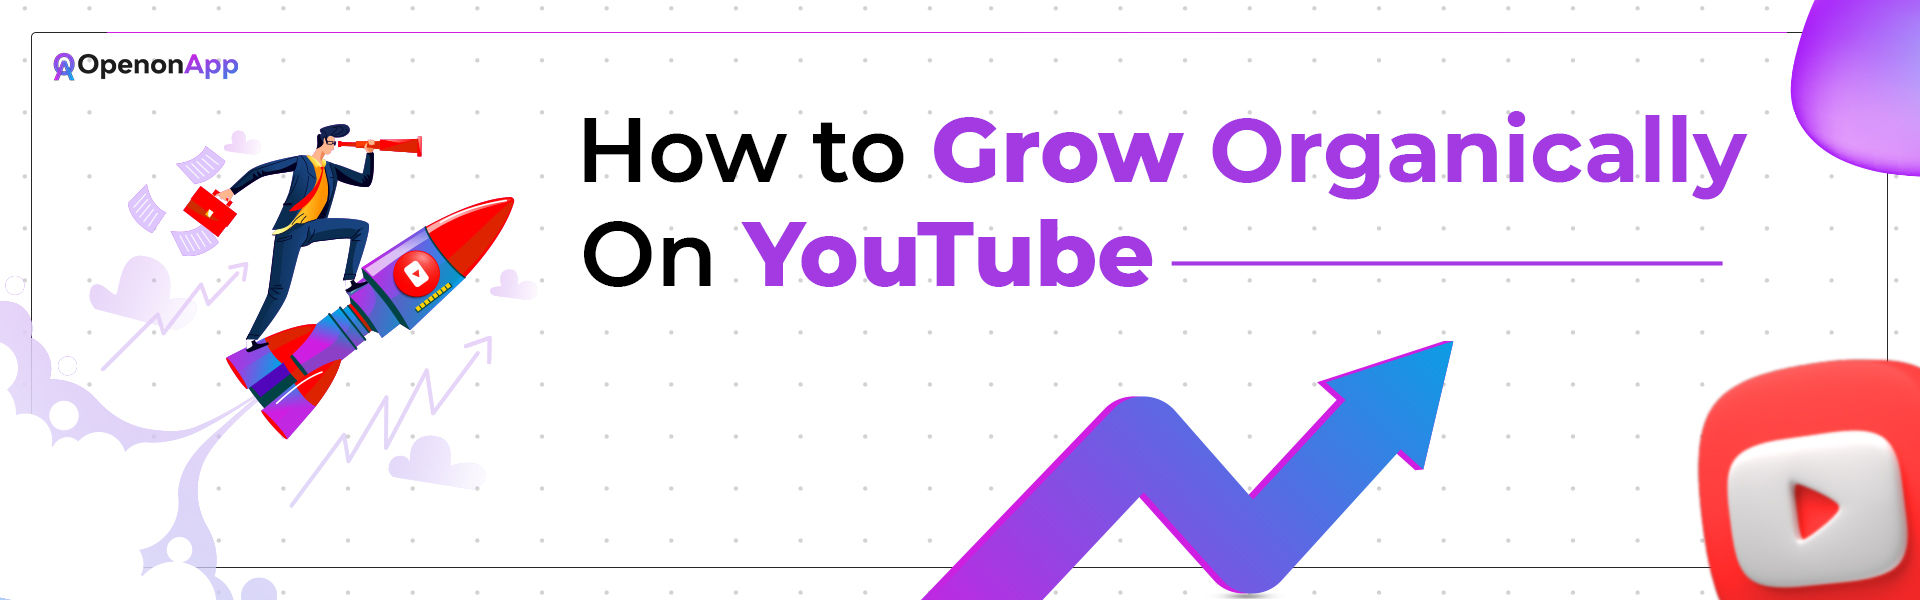 grow organically on YouTube